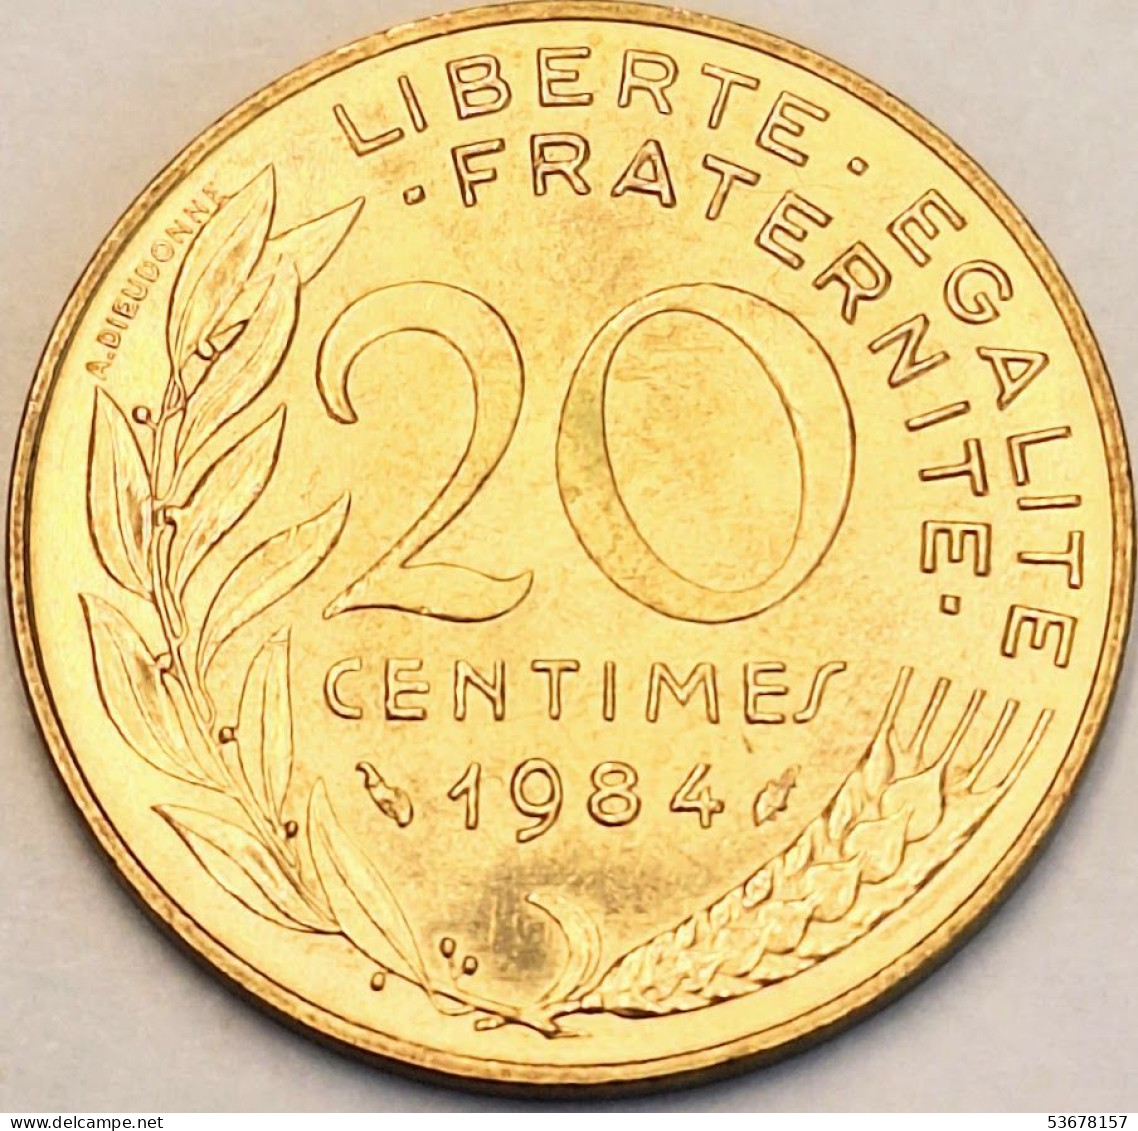 France - 20 Centimes 1984, KM# 930 (#4270) - 20 Centimes